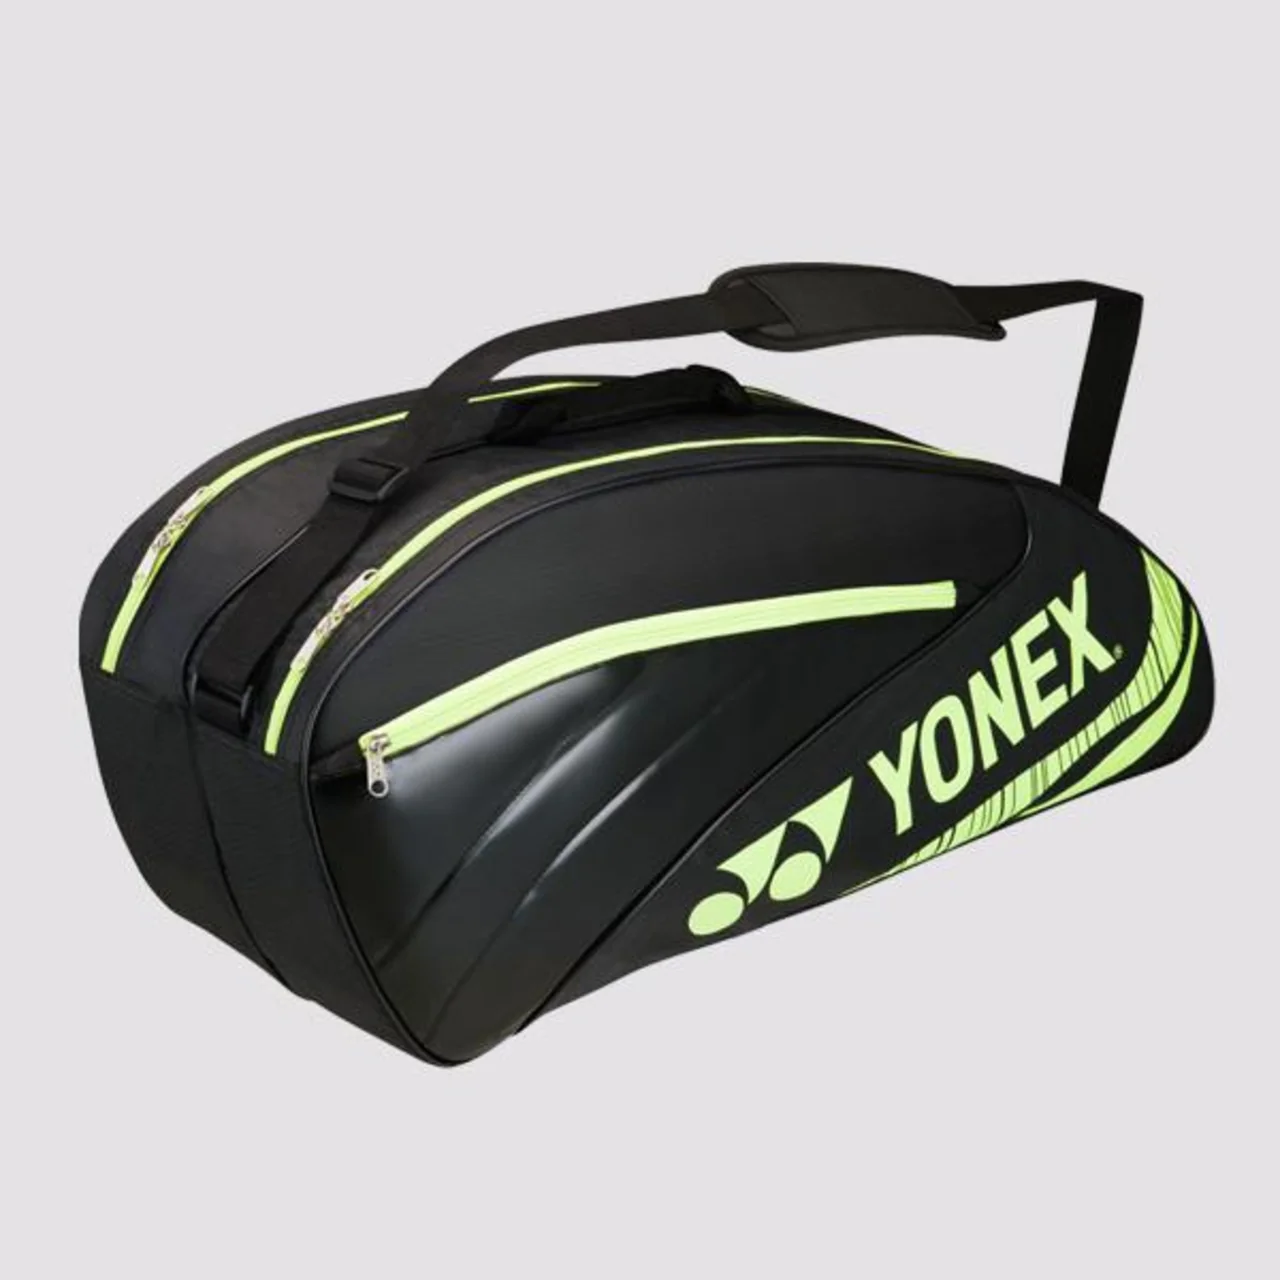 Yonex Perform Bag x6 Black